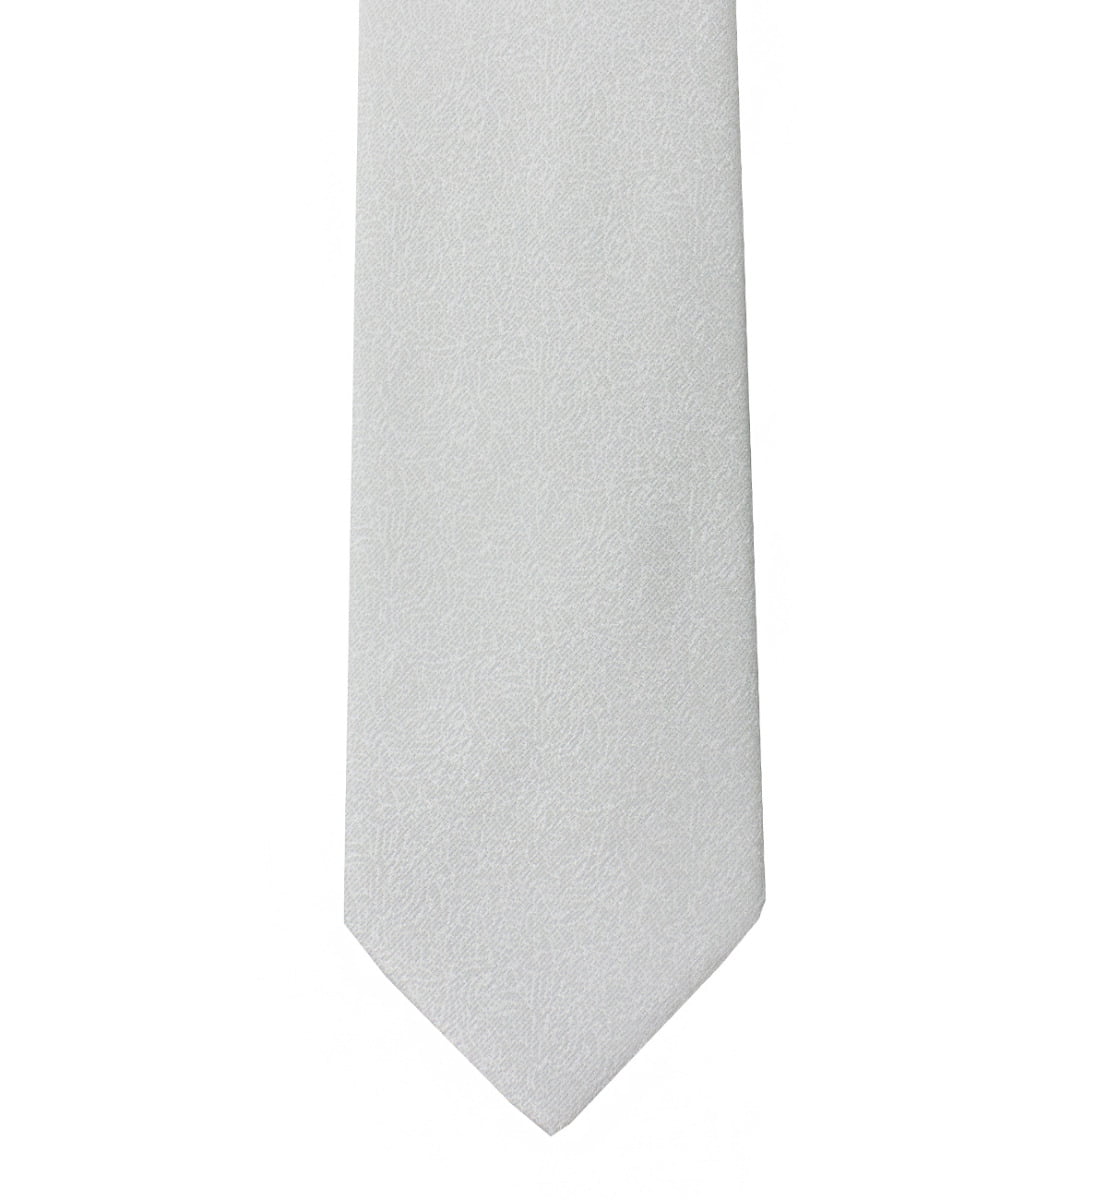 Cravatta uomo perla effetto melange 8cm di larghezza made in italy